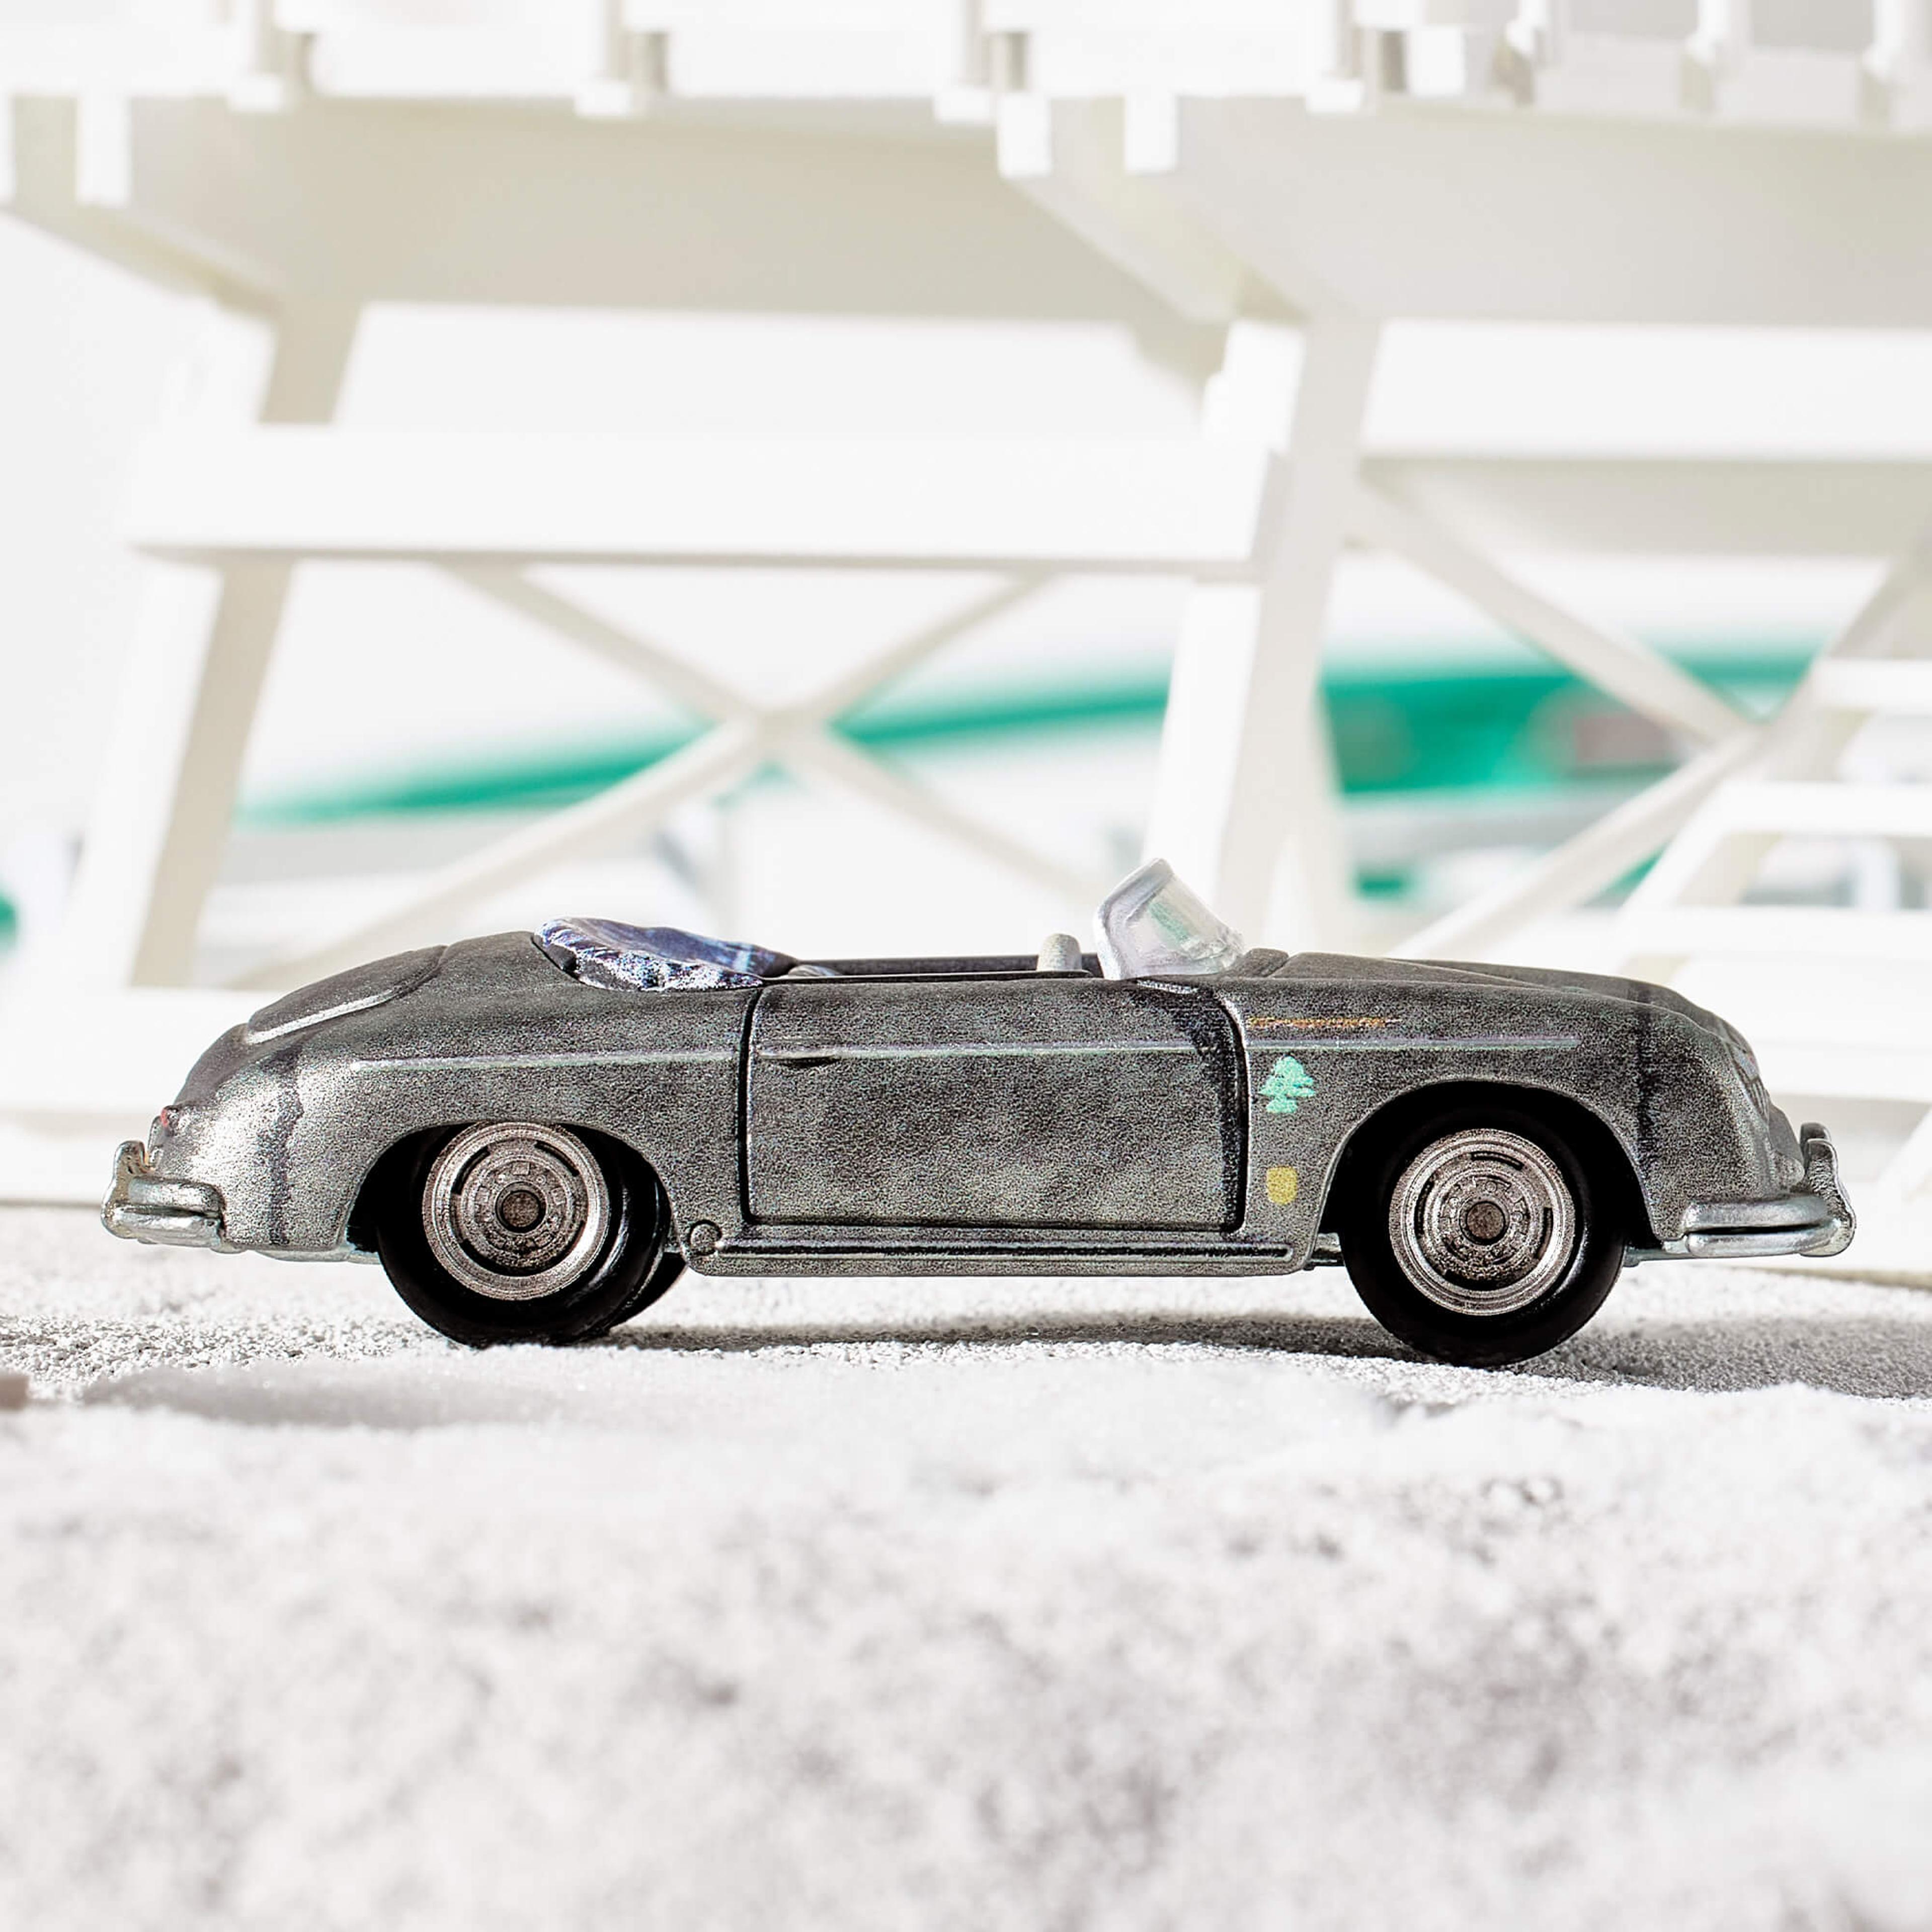 Alternate View 2 of Hot Wheels x Daniel Arsham Porsche 356 “Bonsai” Speedster